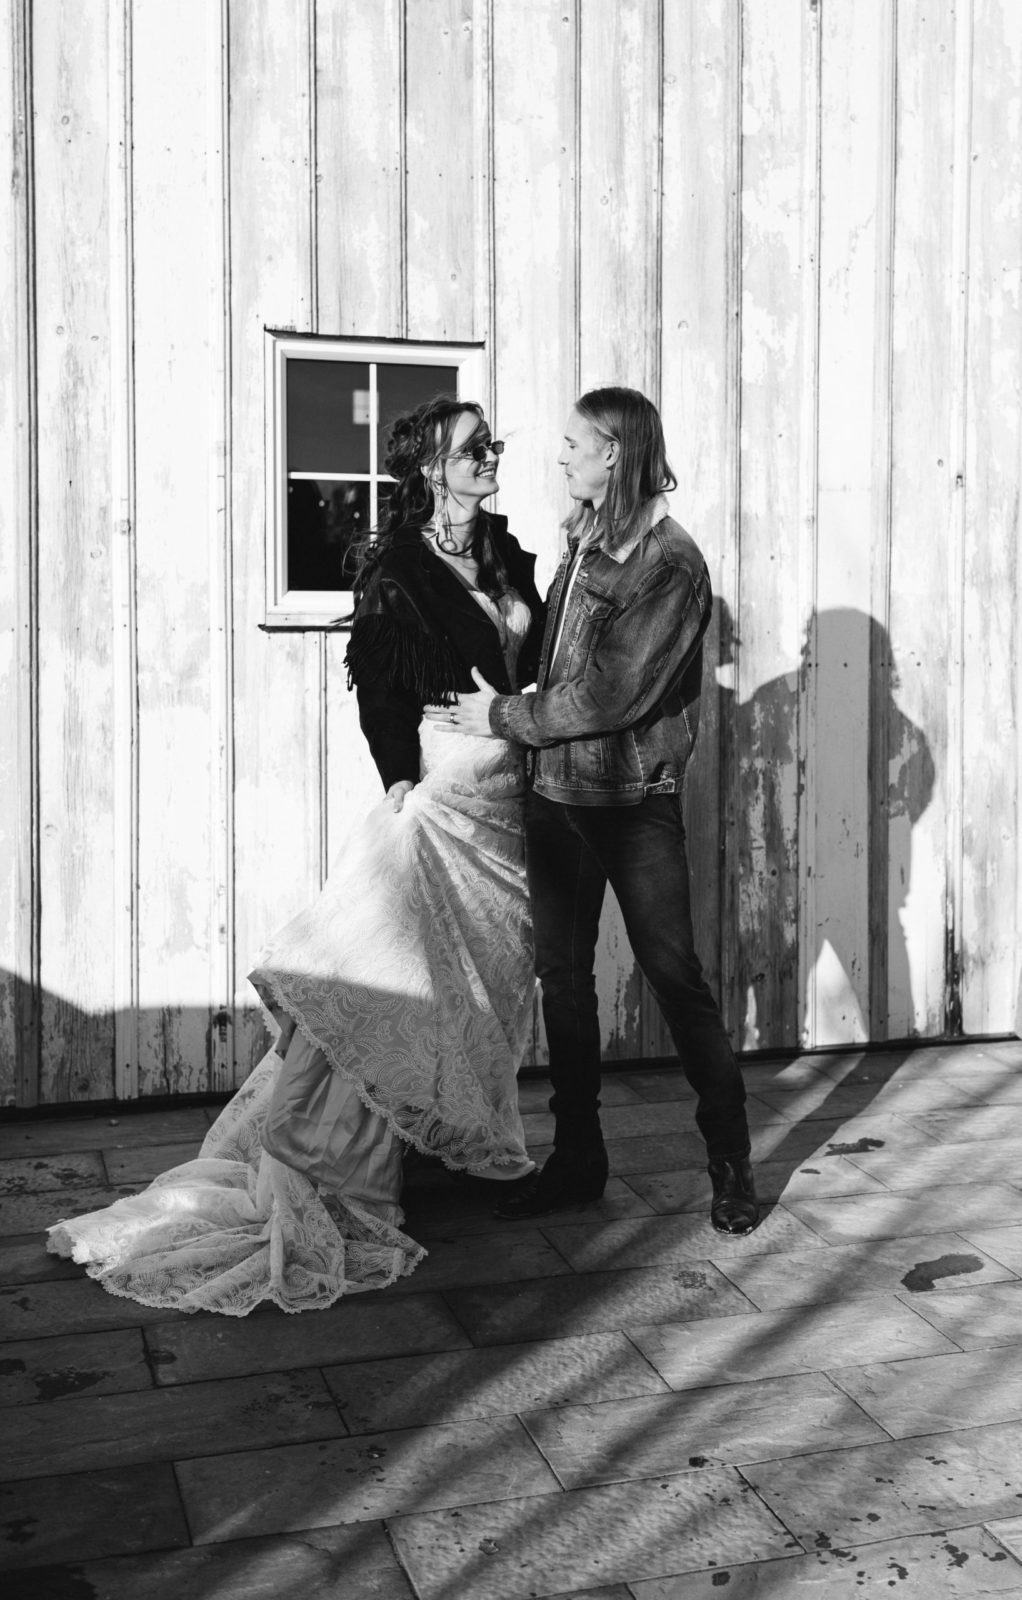 Outdoor winter Alberta wedding, modern alternative wedding style, unique wedding photography, black and white photography